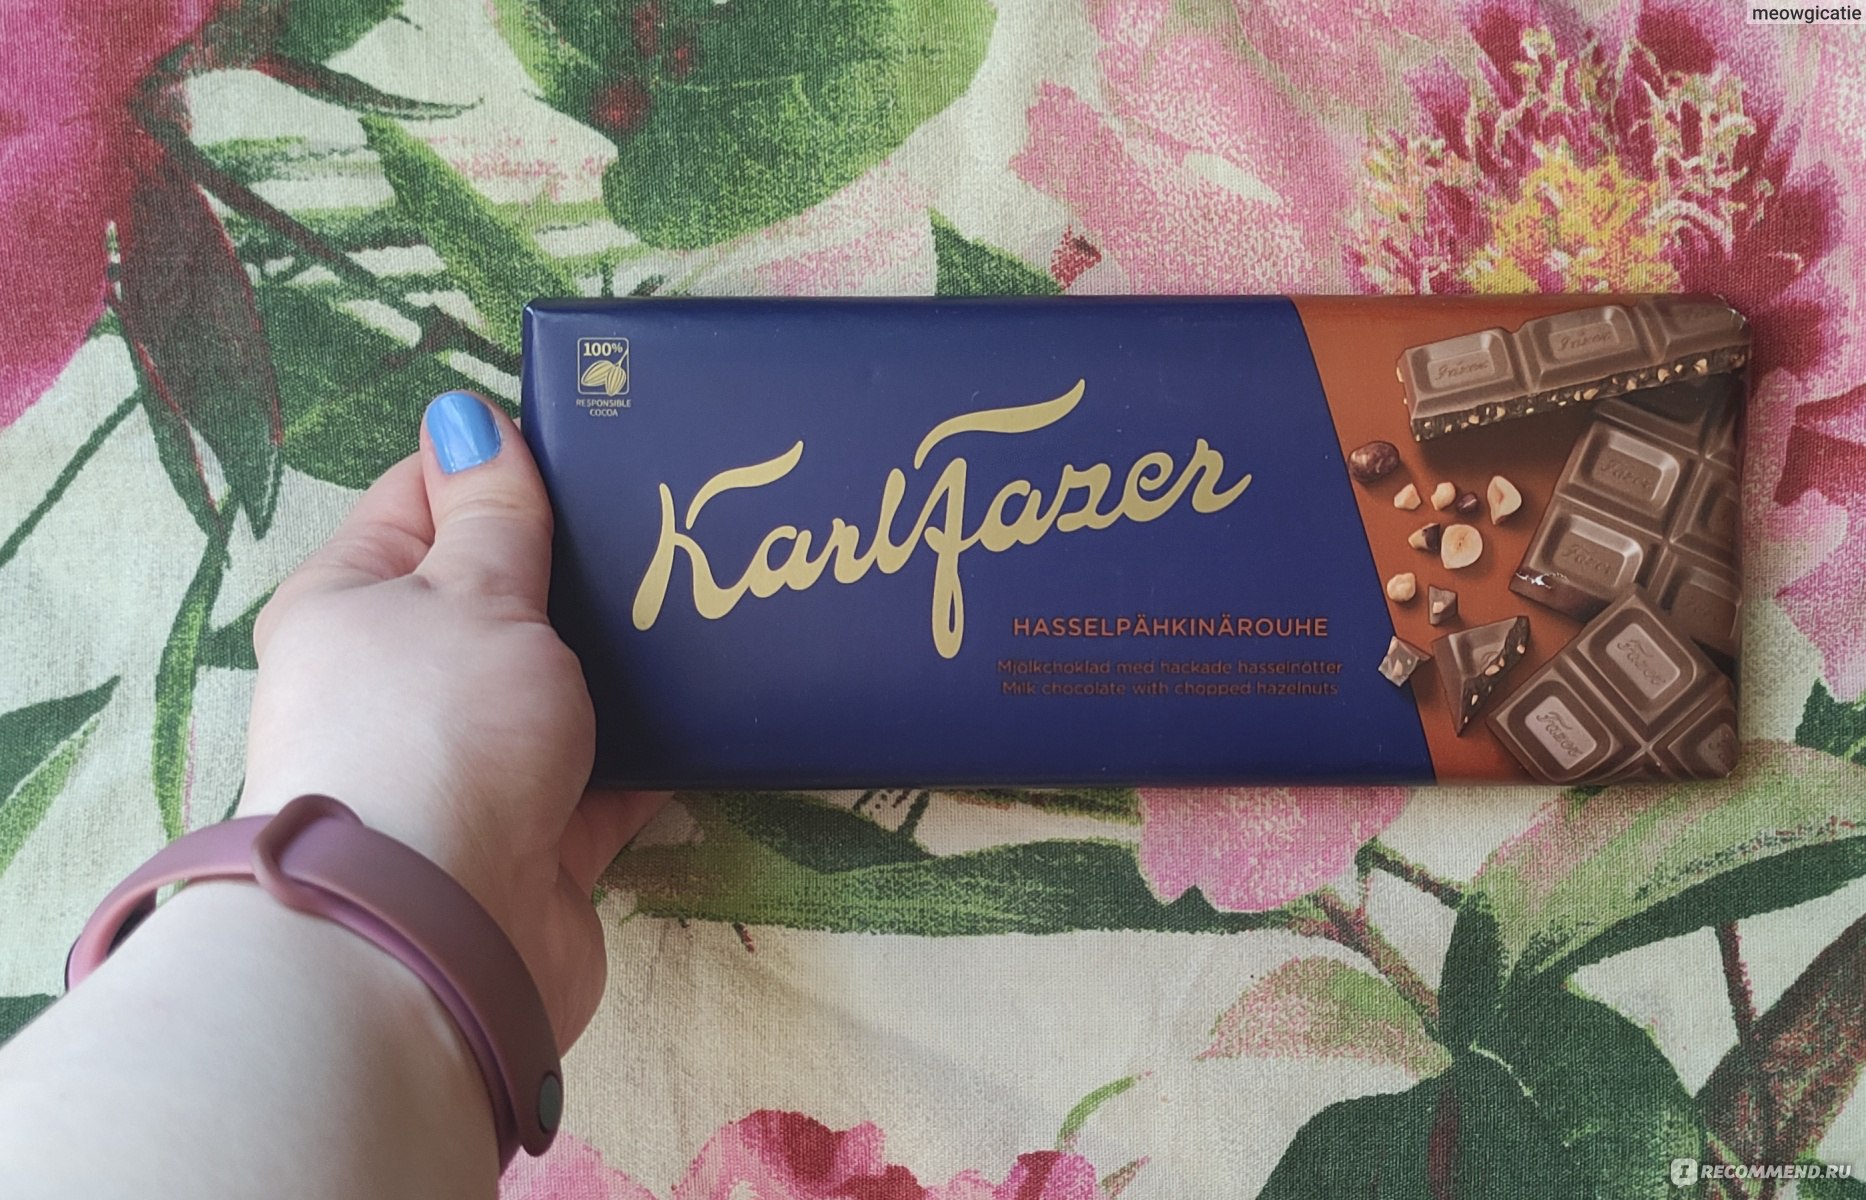 шоколад из финляндии